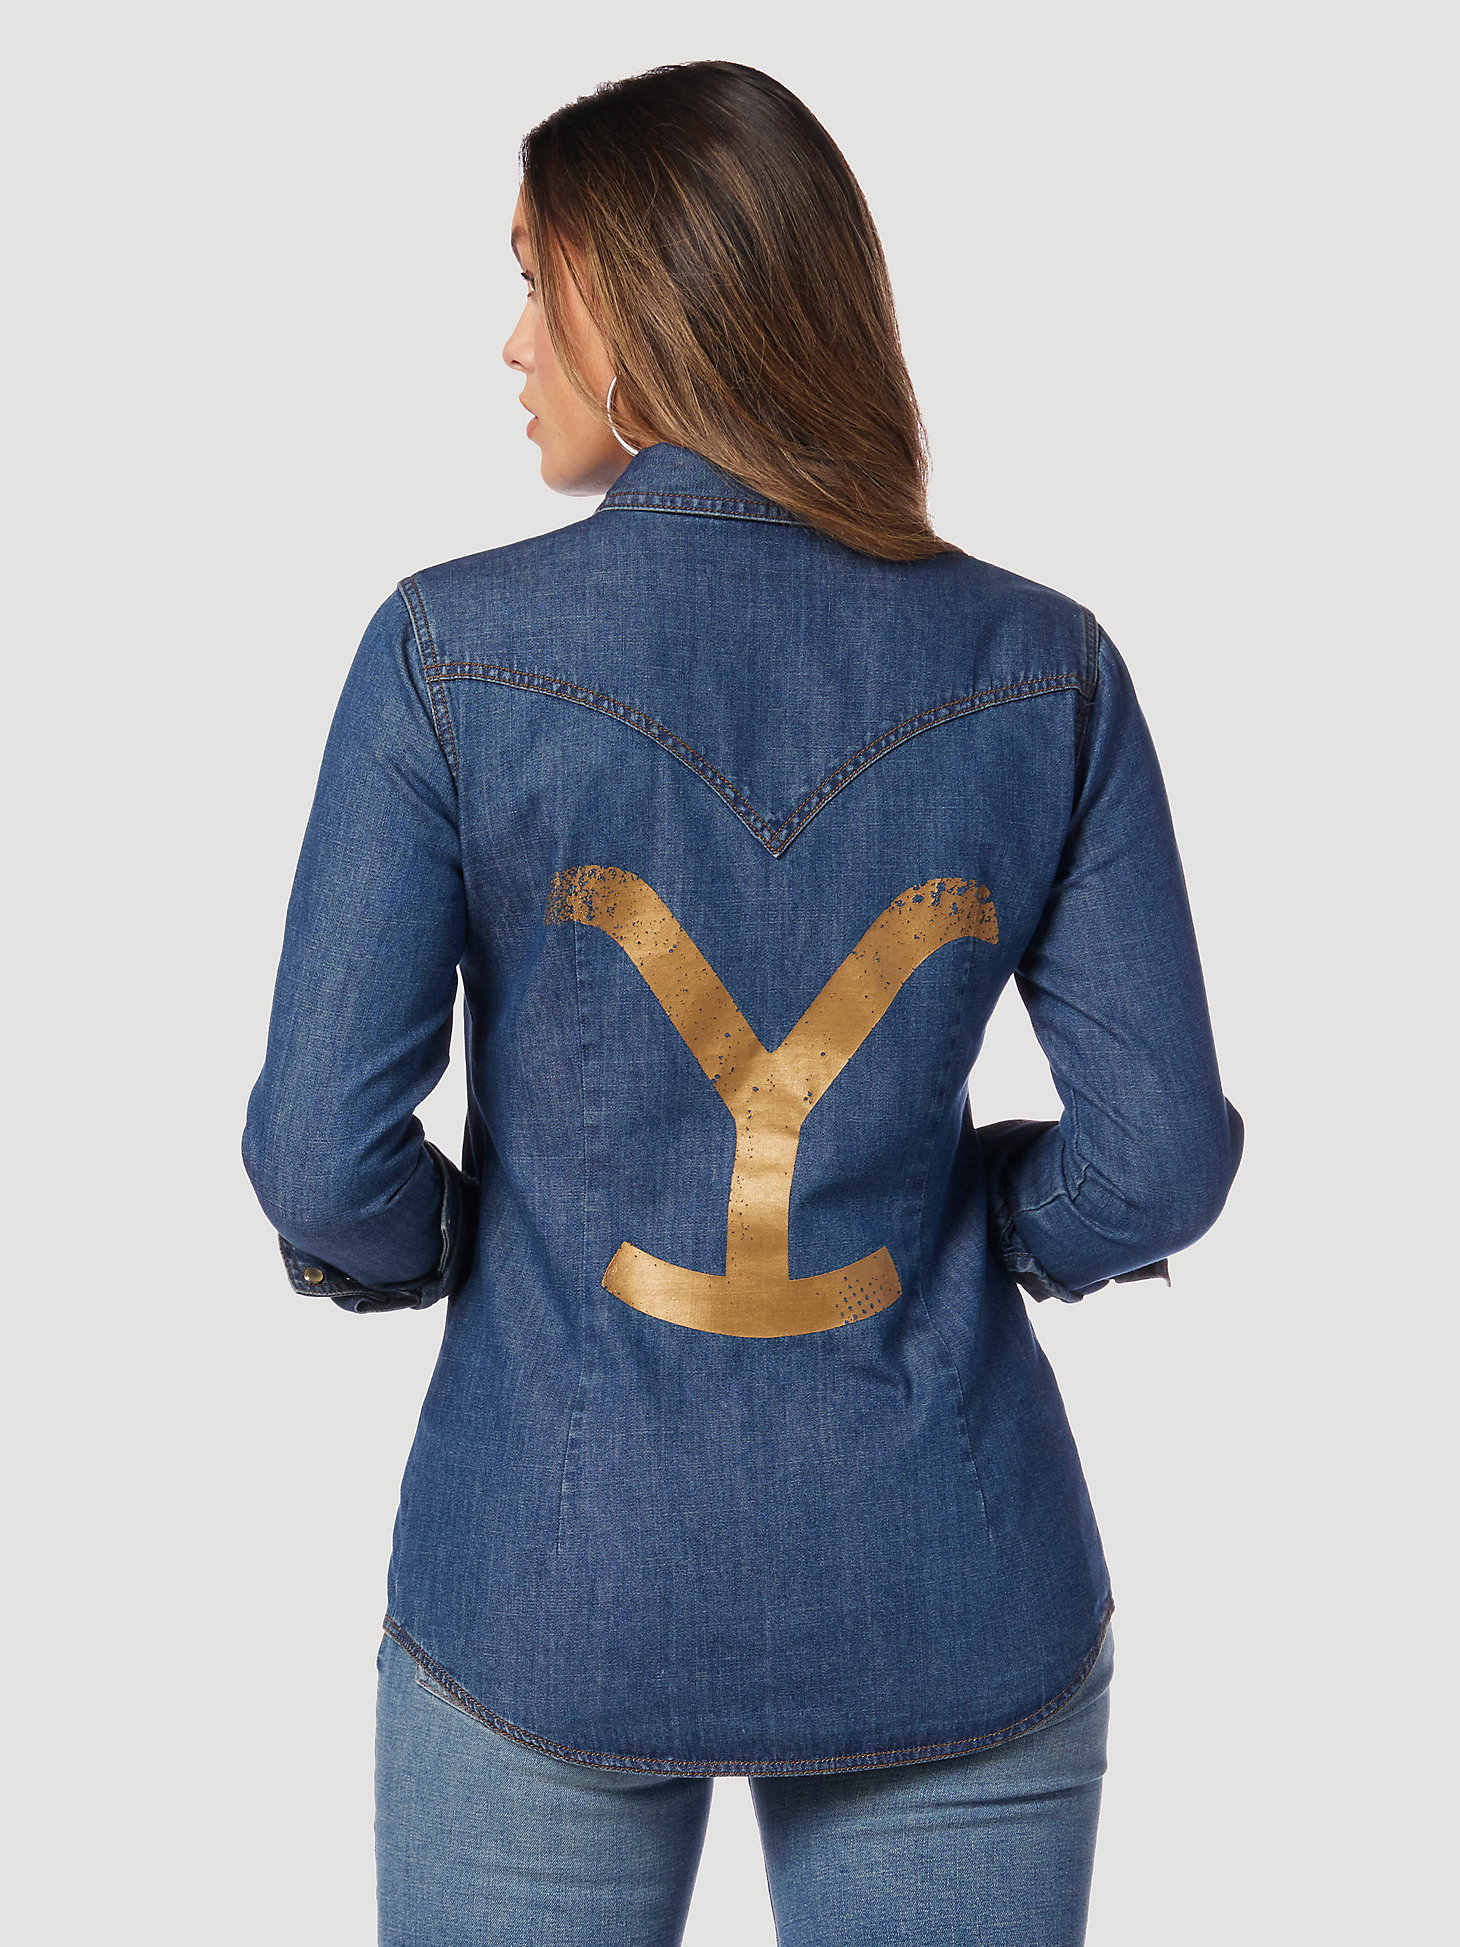 Wrangler x Yellowstone Women's Metallic Screen Print Denim Shirt in Dark Wash alternative view 1